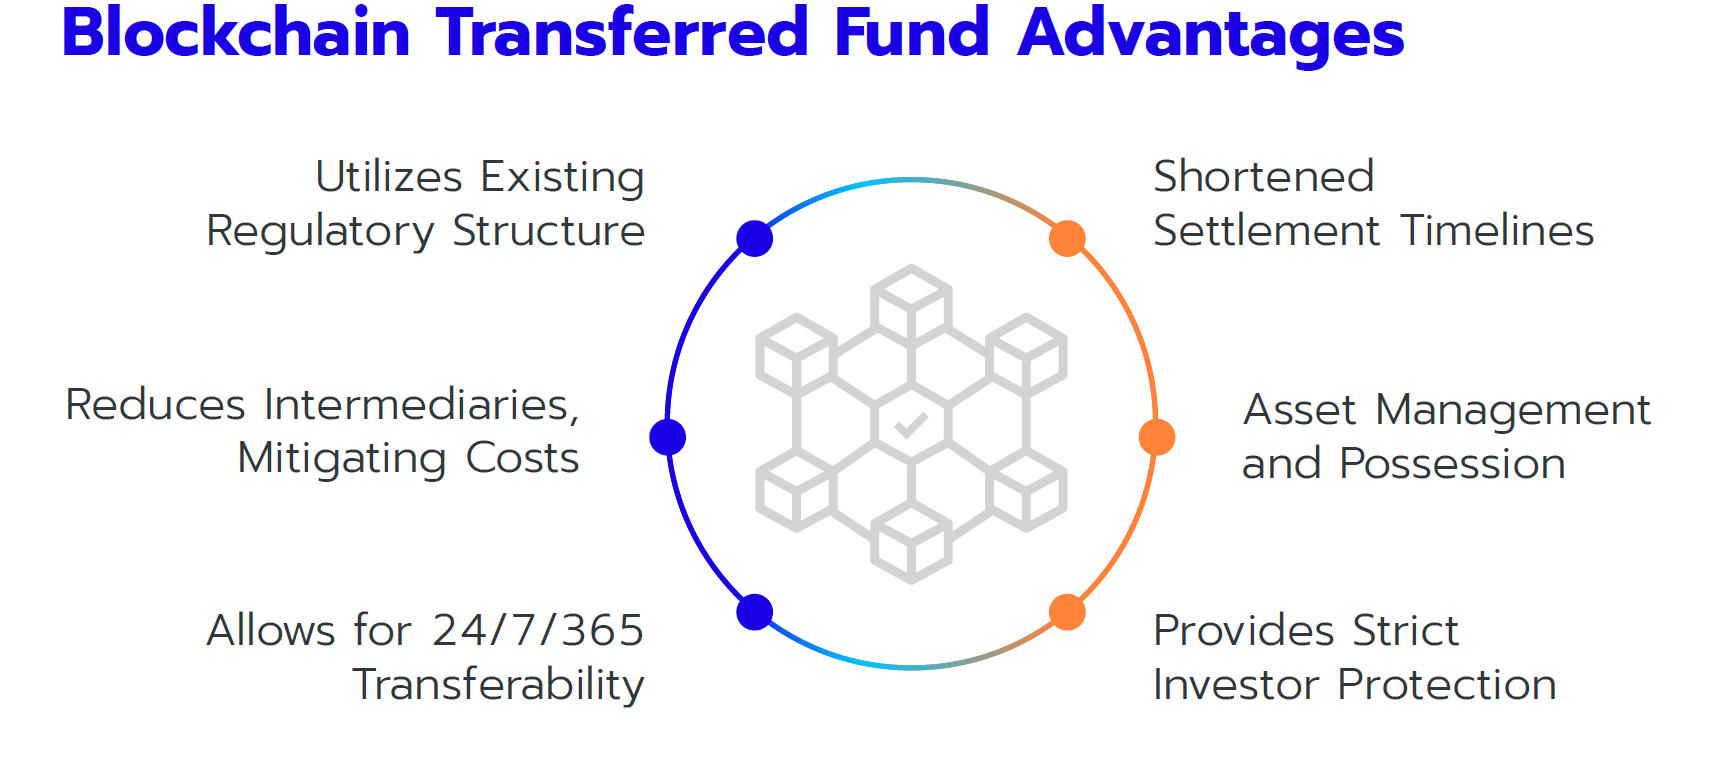 Blockchain-Transferred-Fund-Advantages-Paper